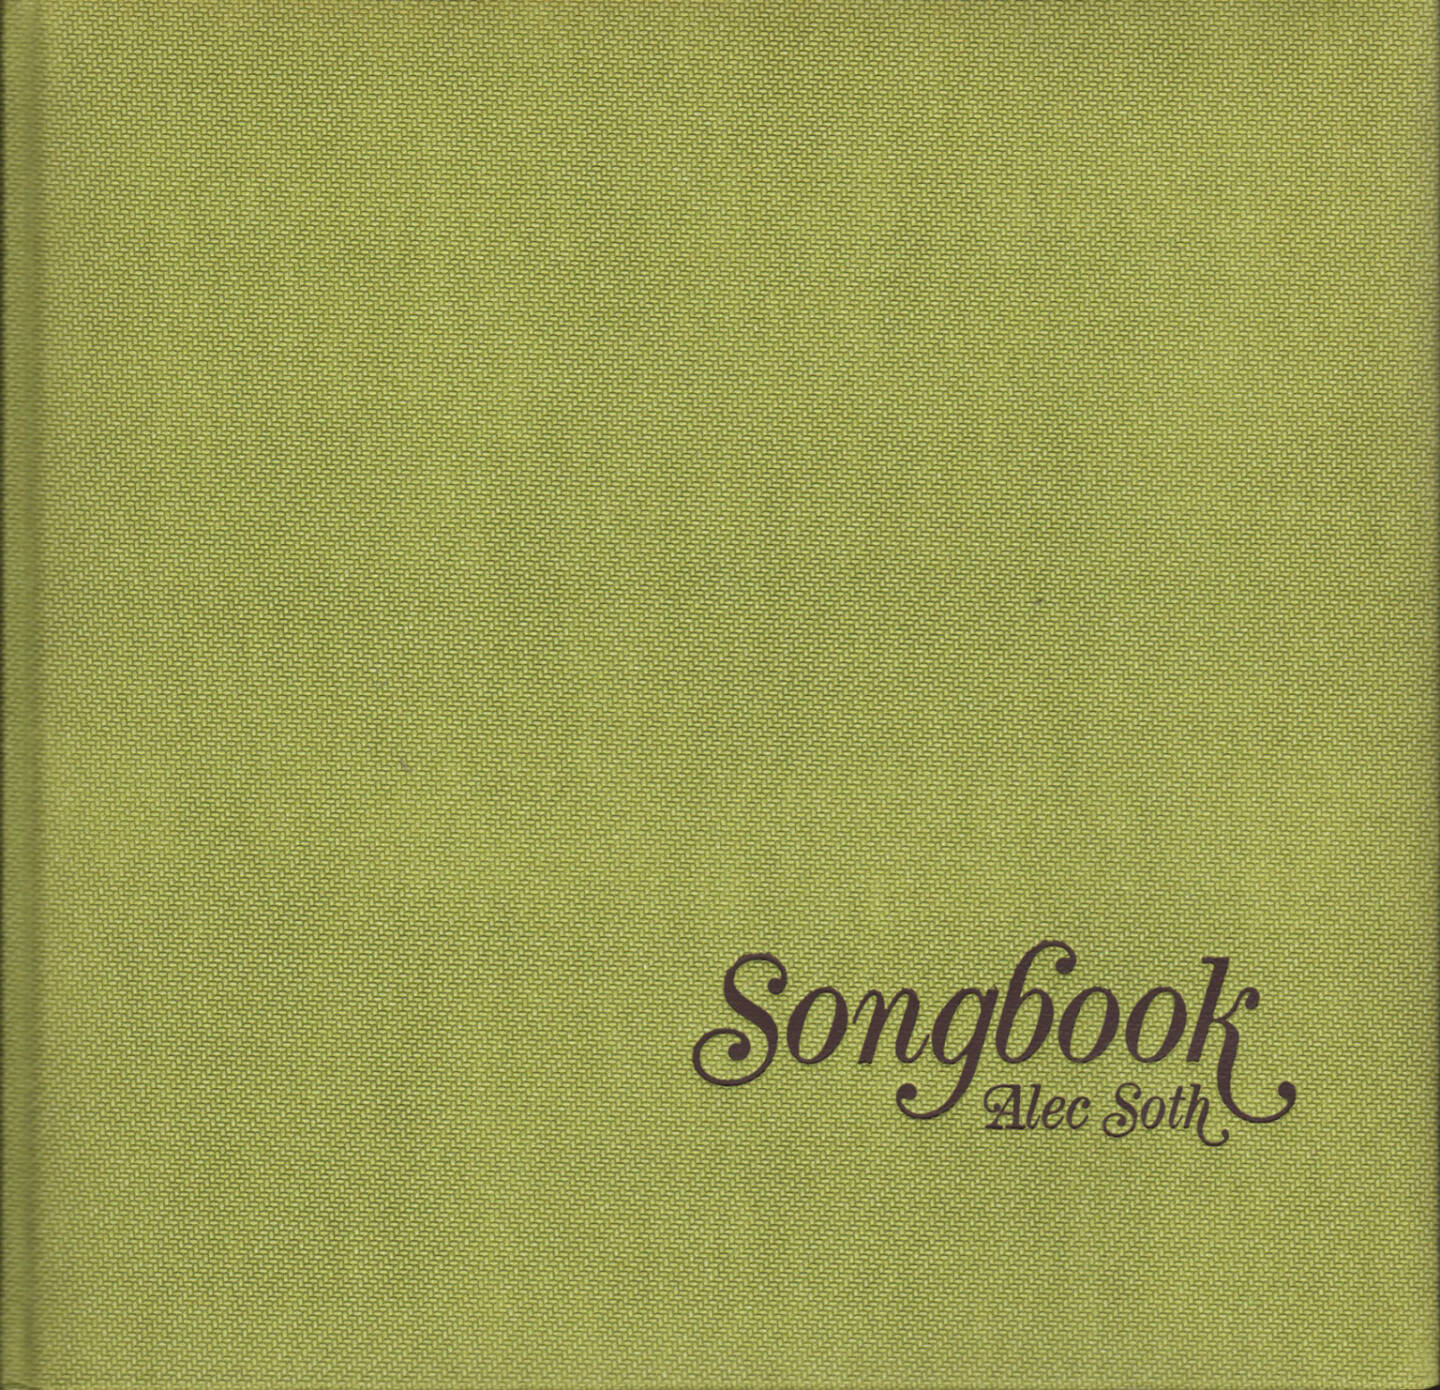 Alec Soth - Songbook, MACK 2014, Cover - http://josefchladek.com/book/alec_soth_-_songbook